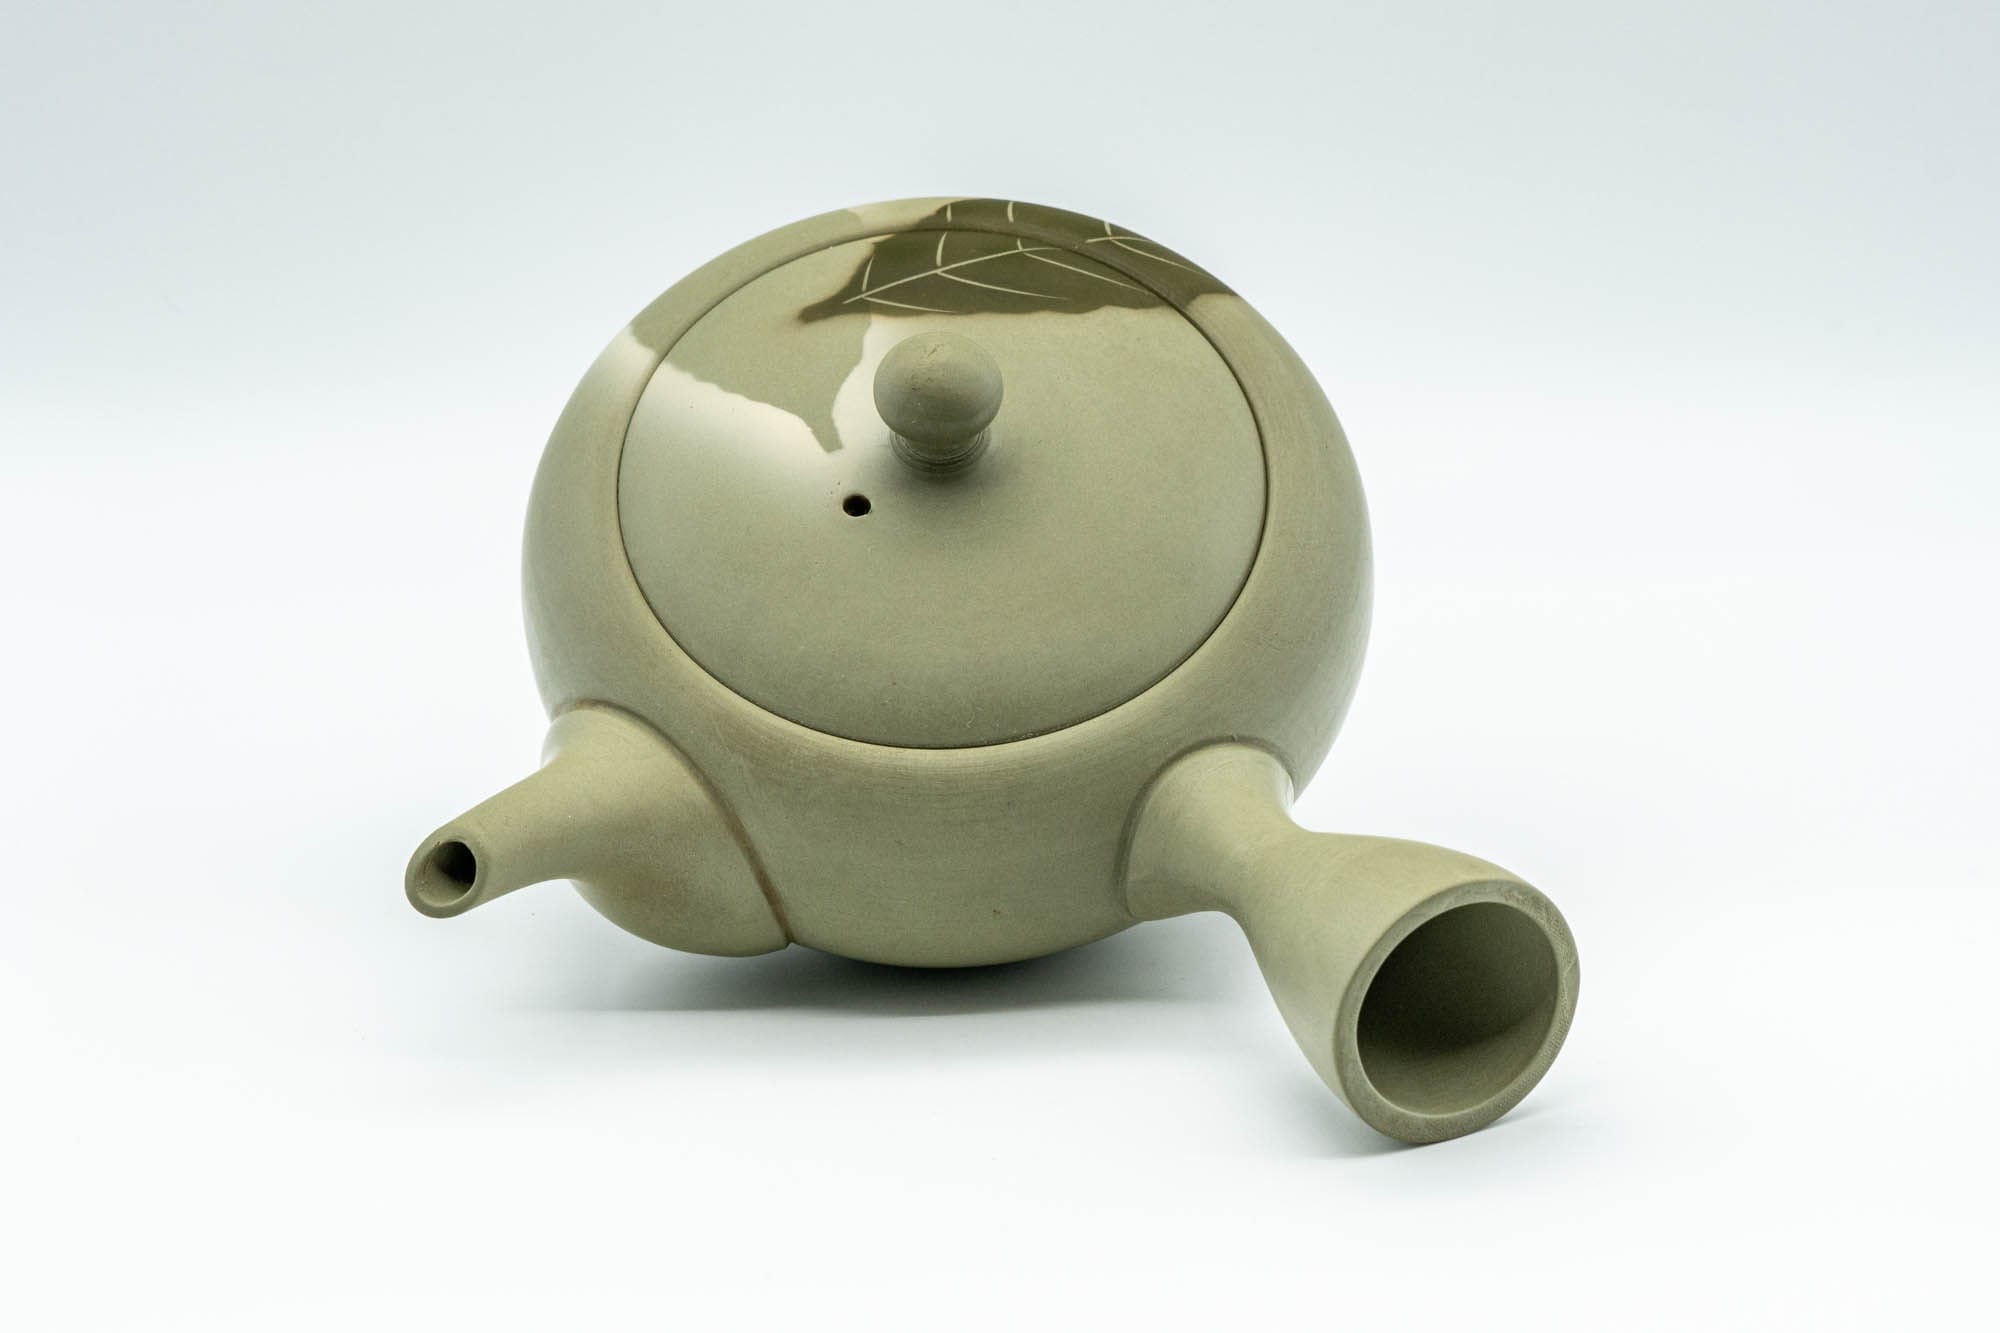 Japanese Kyusu - Green Tea Leaves Tokoname-yaki Obi-ami 360 Filter Teapot - 250ml